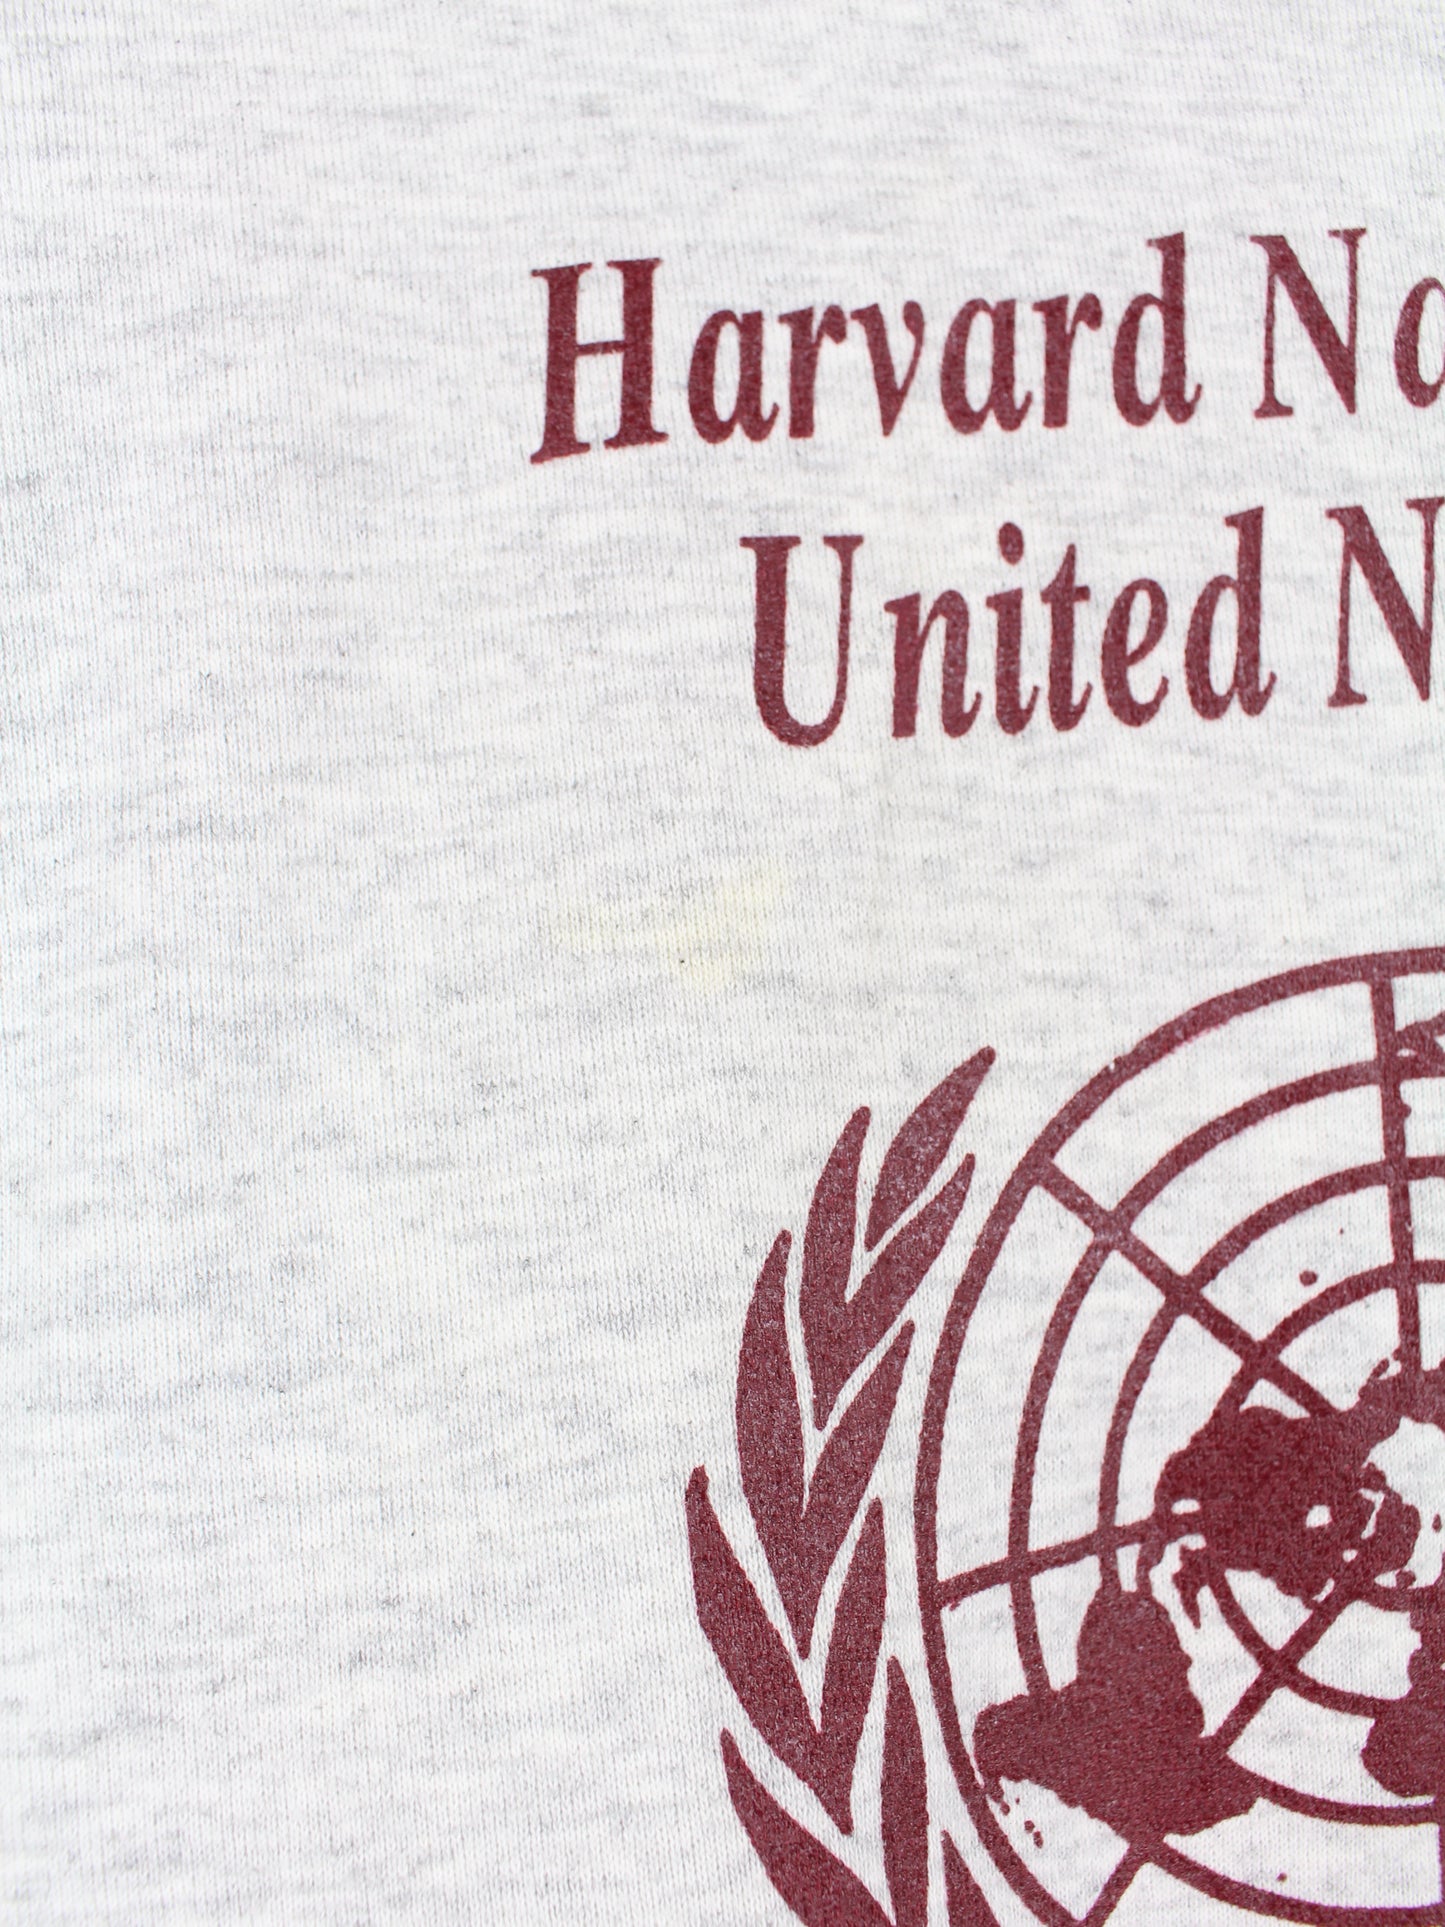 Jerzees 1990 Harvard University Sweater Grau L